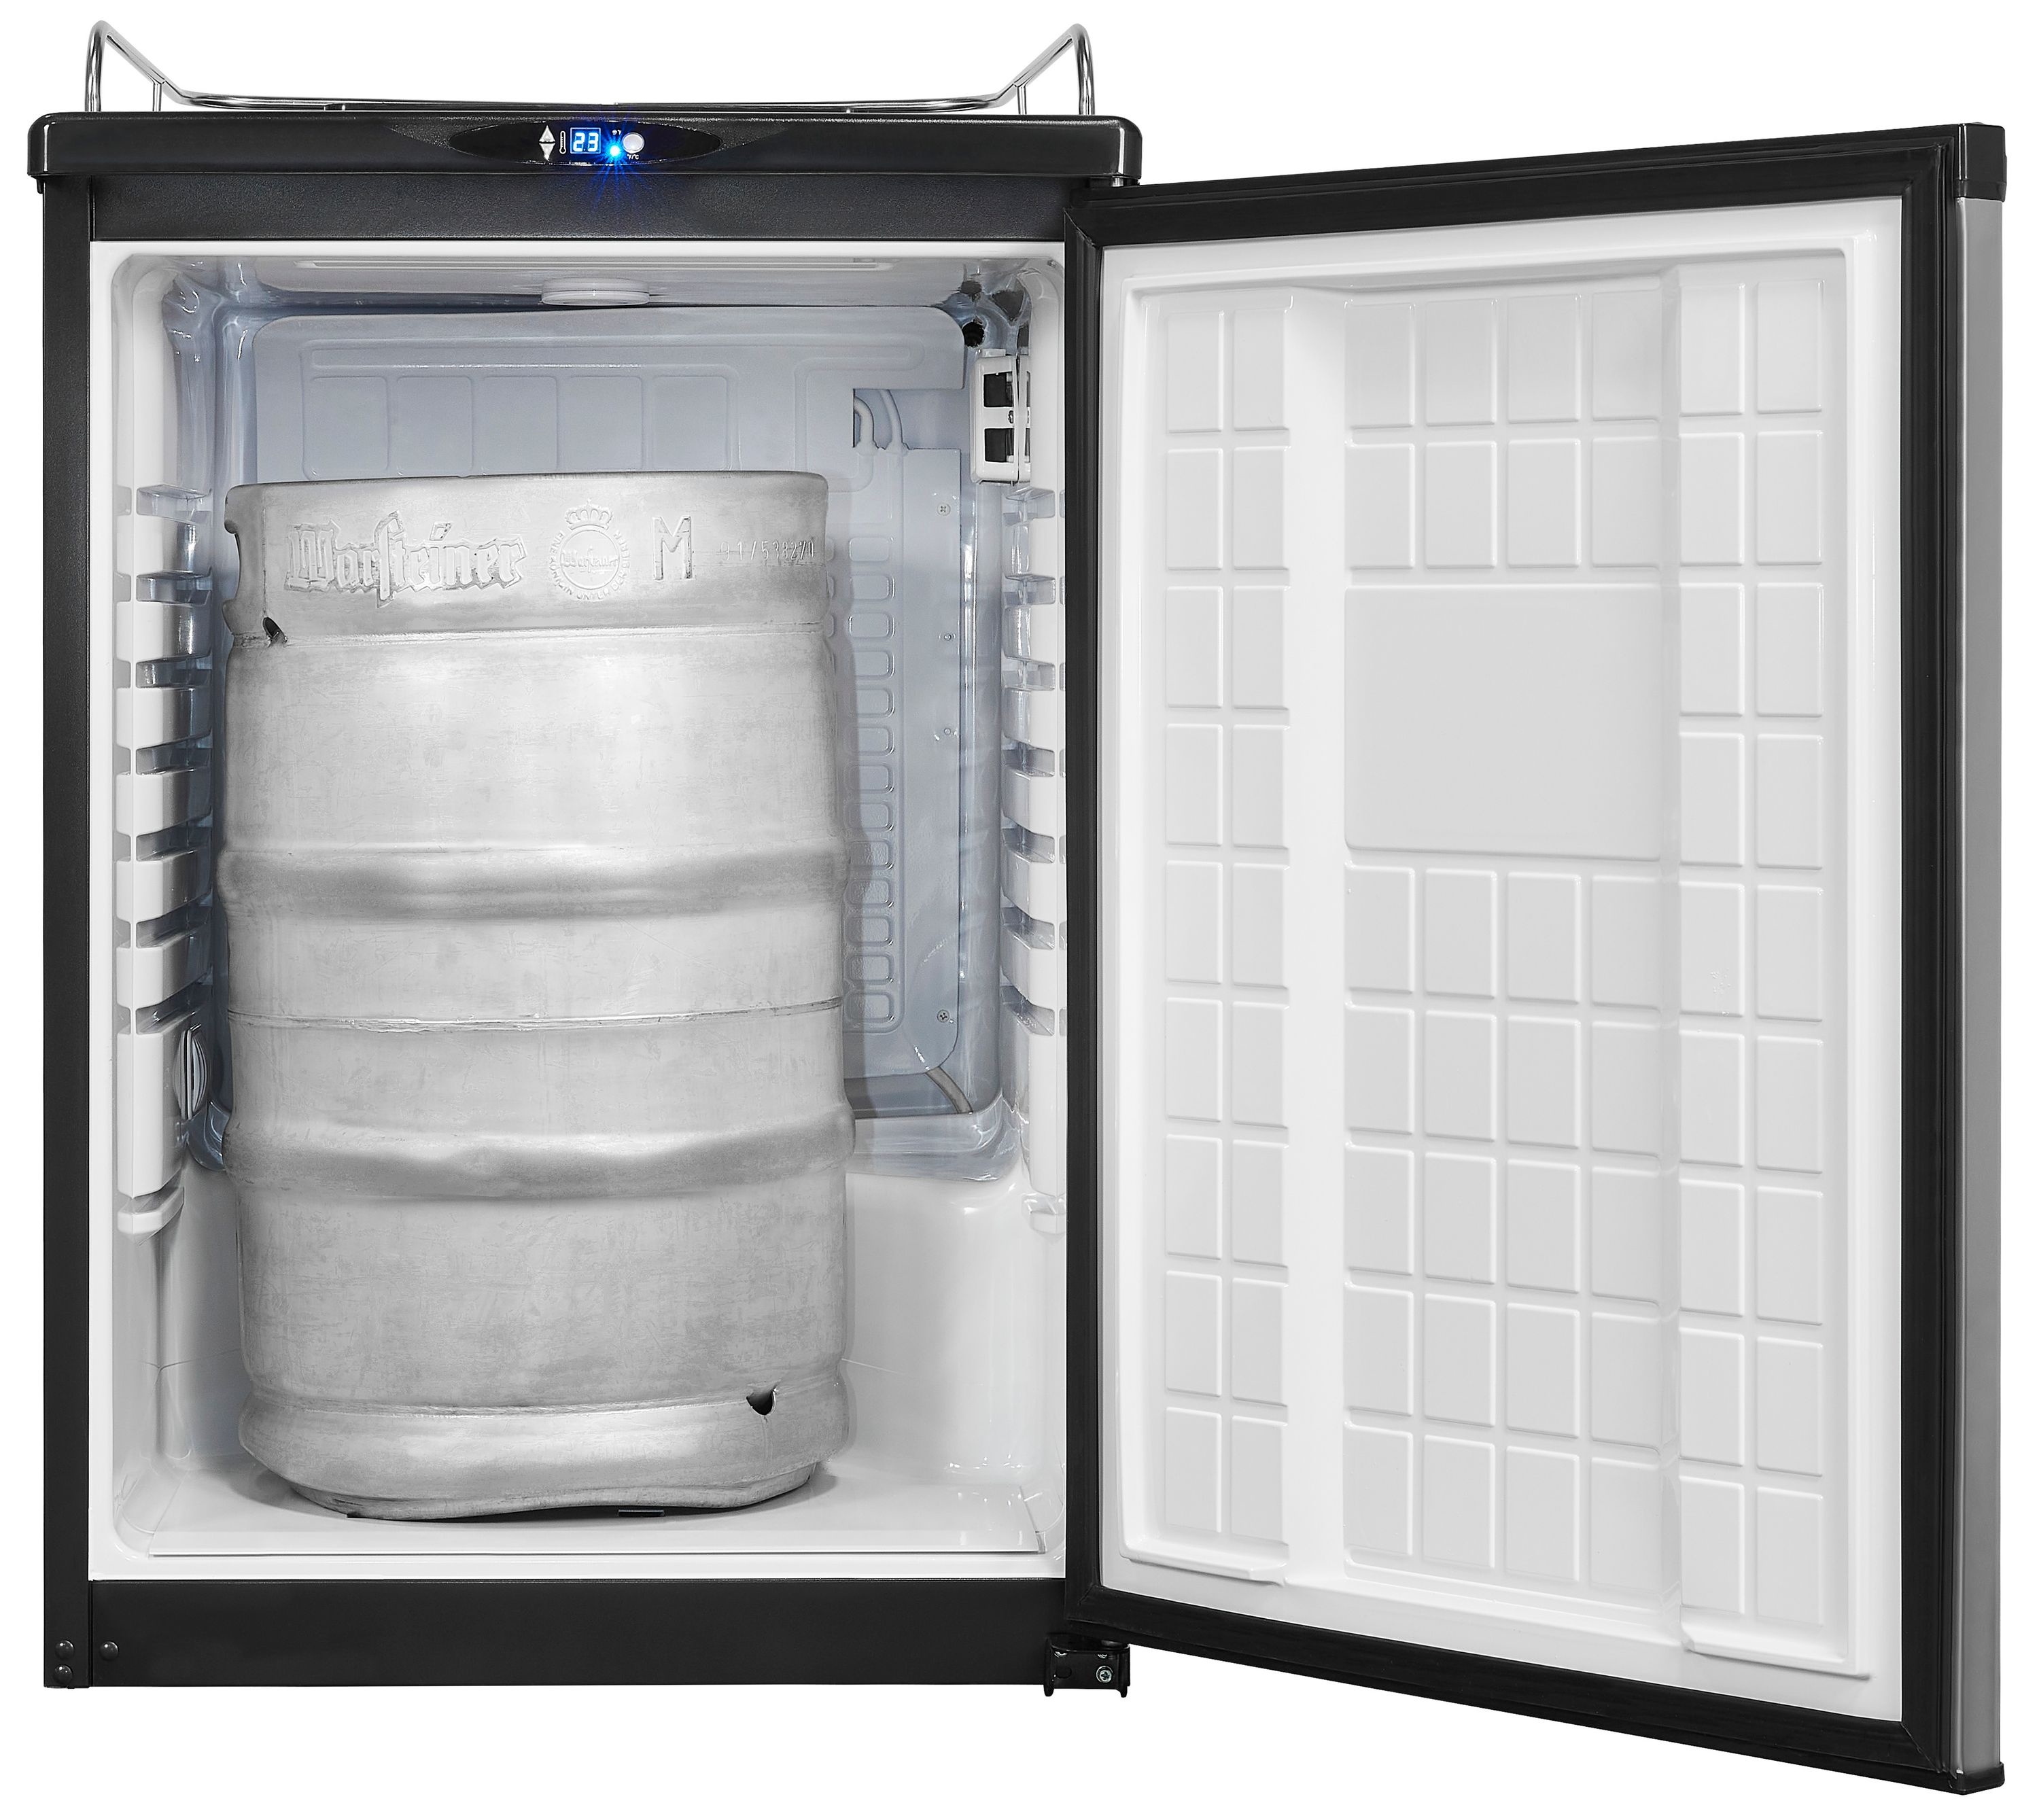 Biertap koelkast Exquisit BK 160  met rvs front deur1 kraans